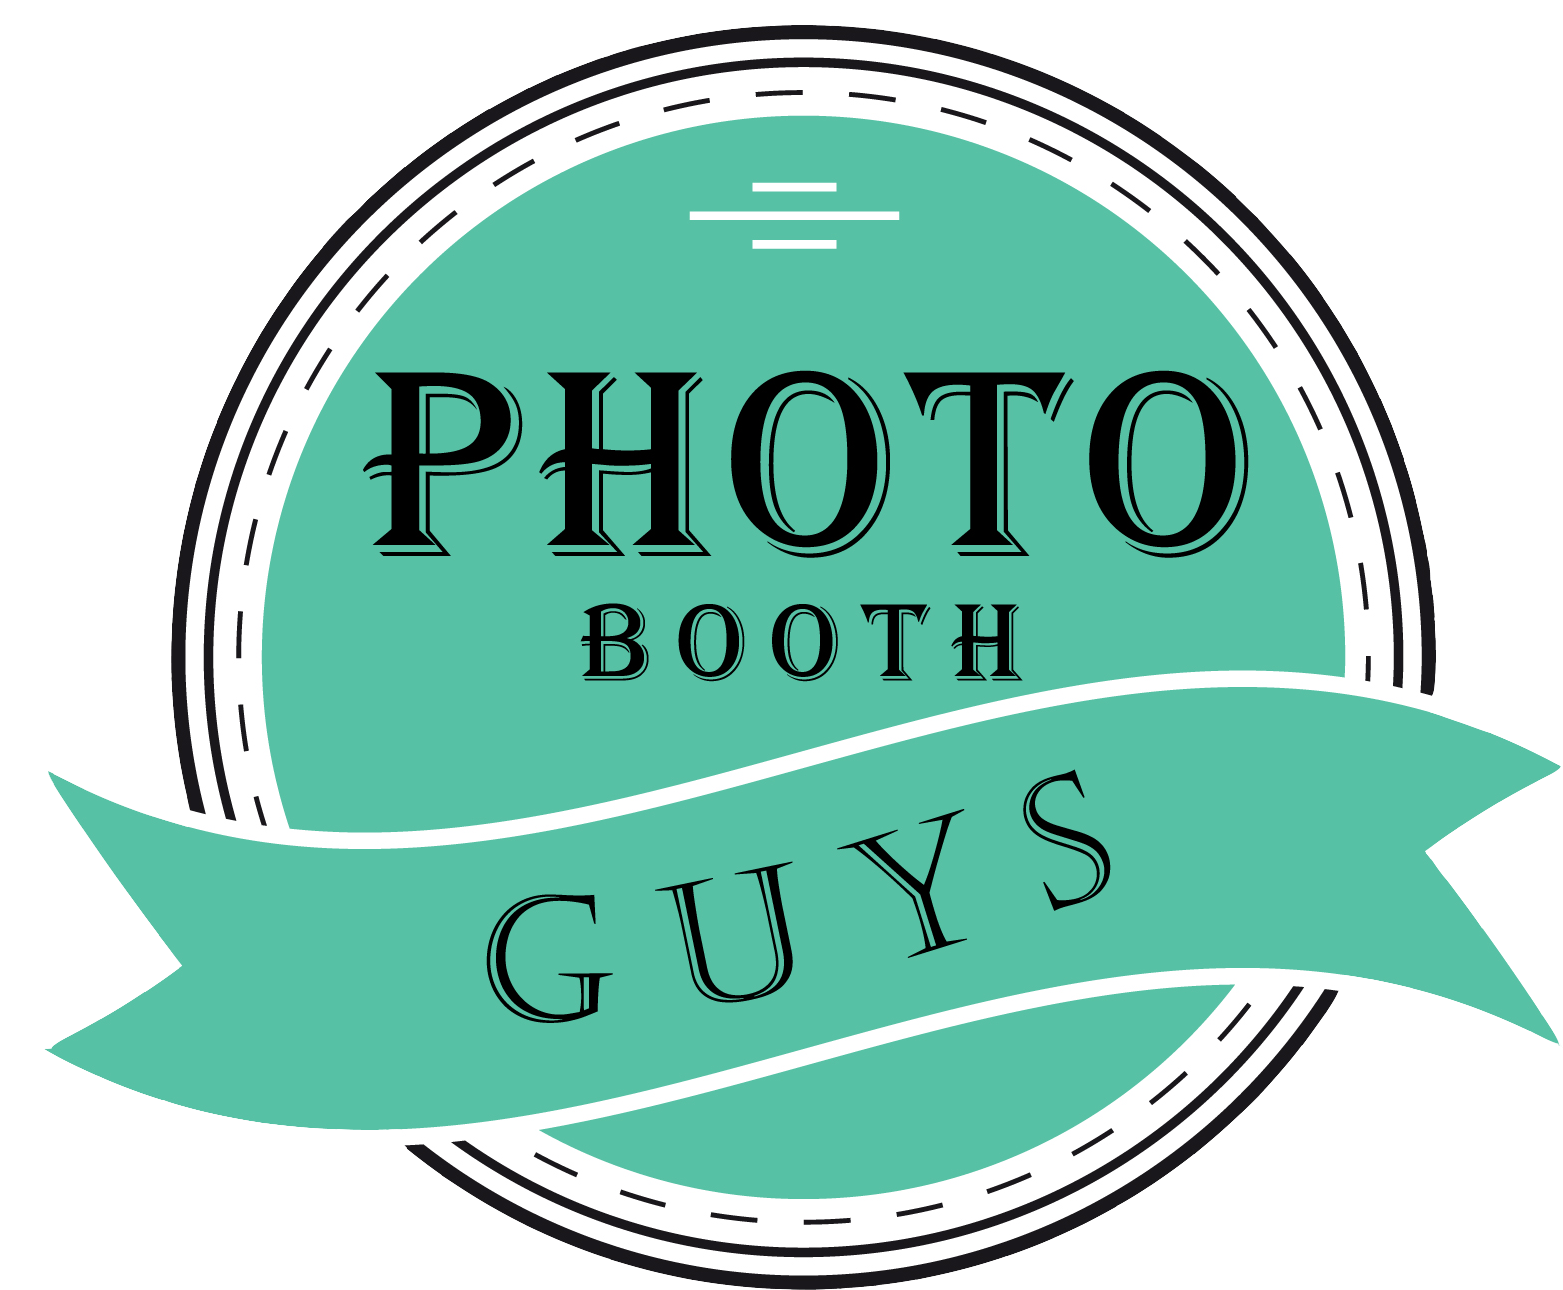 Photobooth Guys Logo PNG image